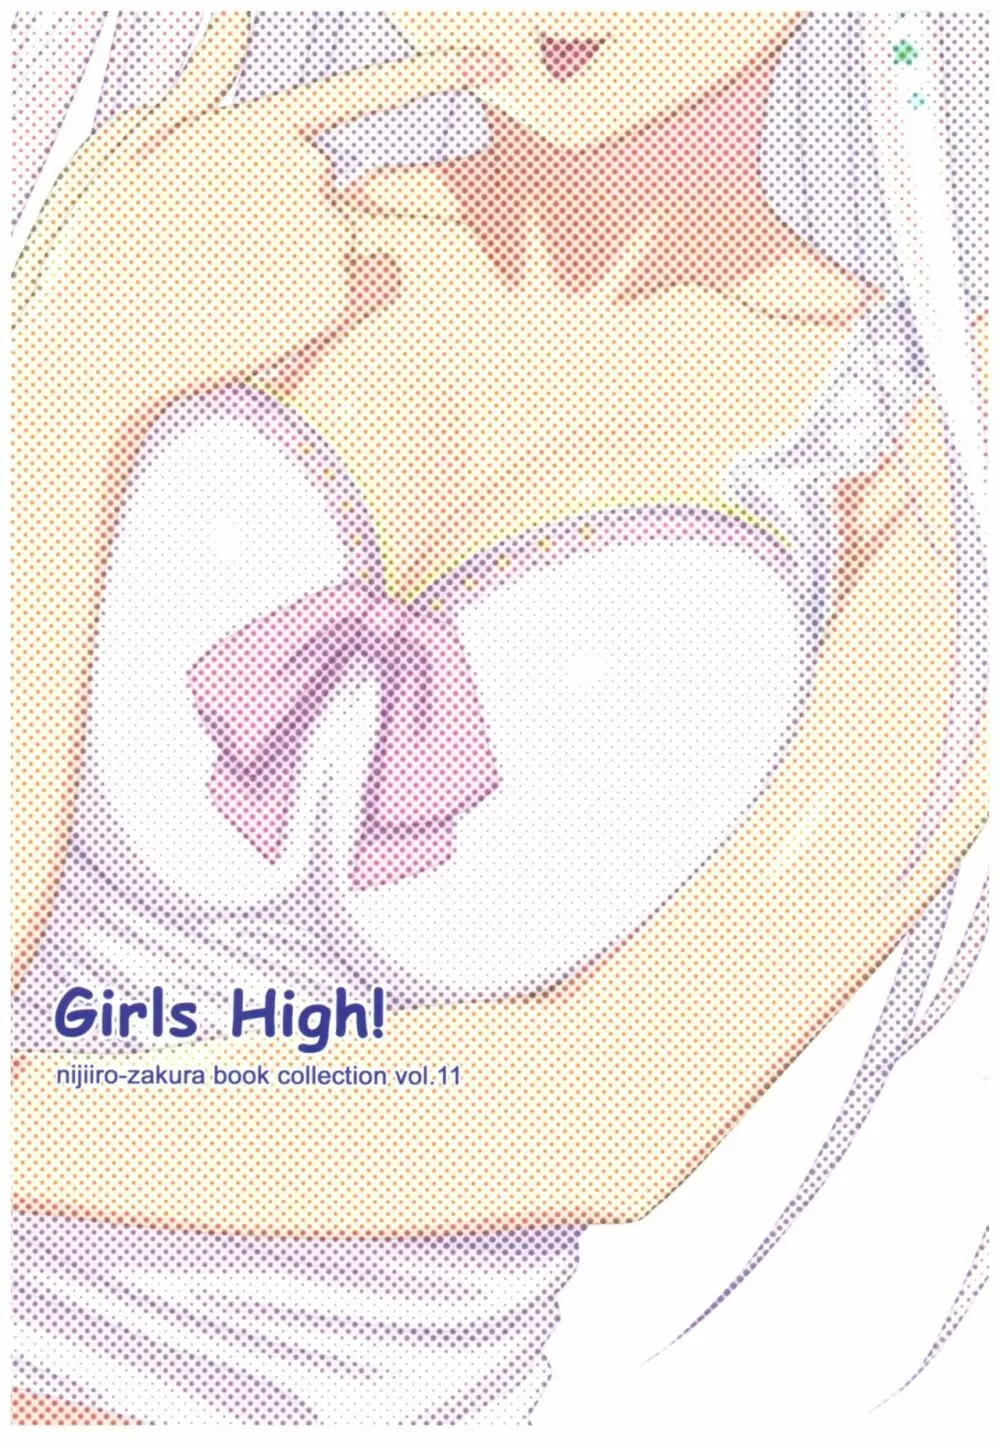 Girls High! - page2